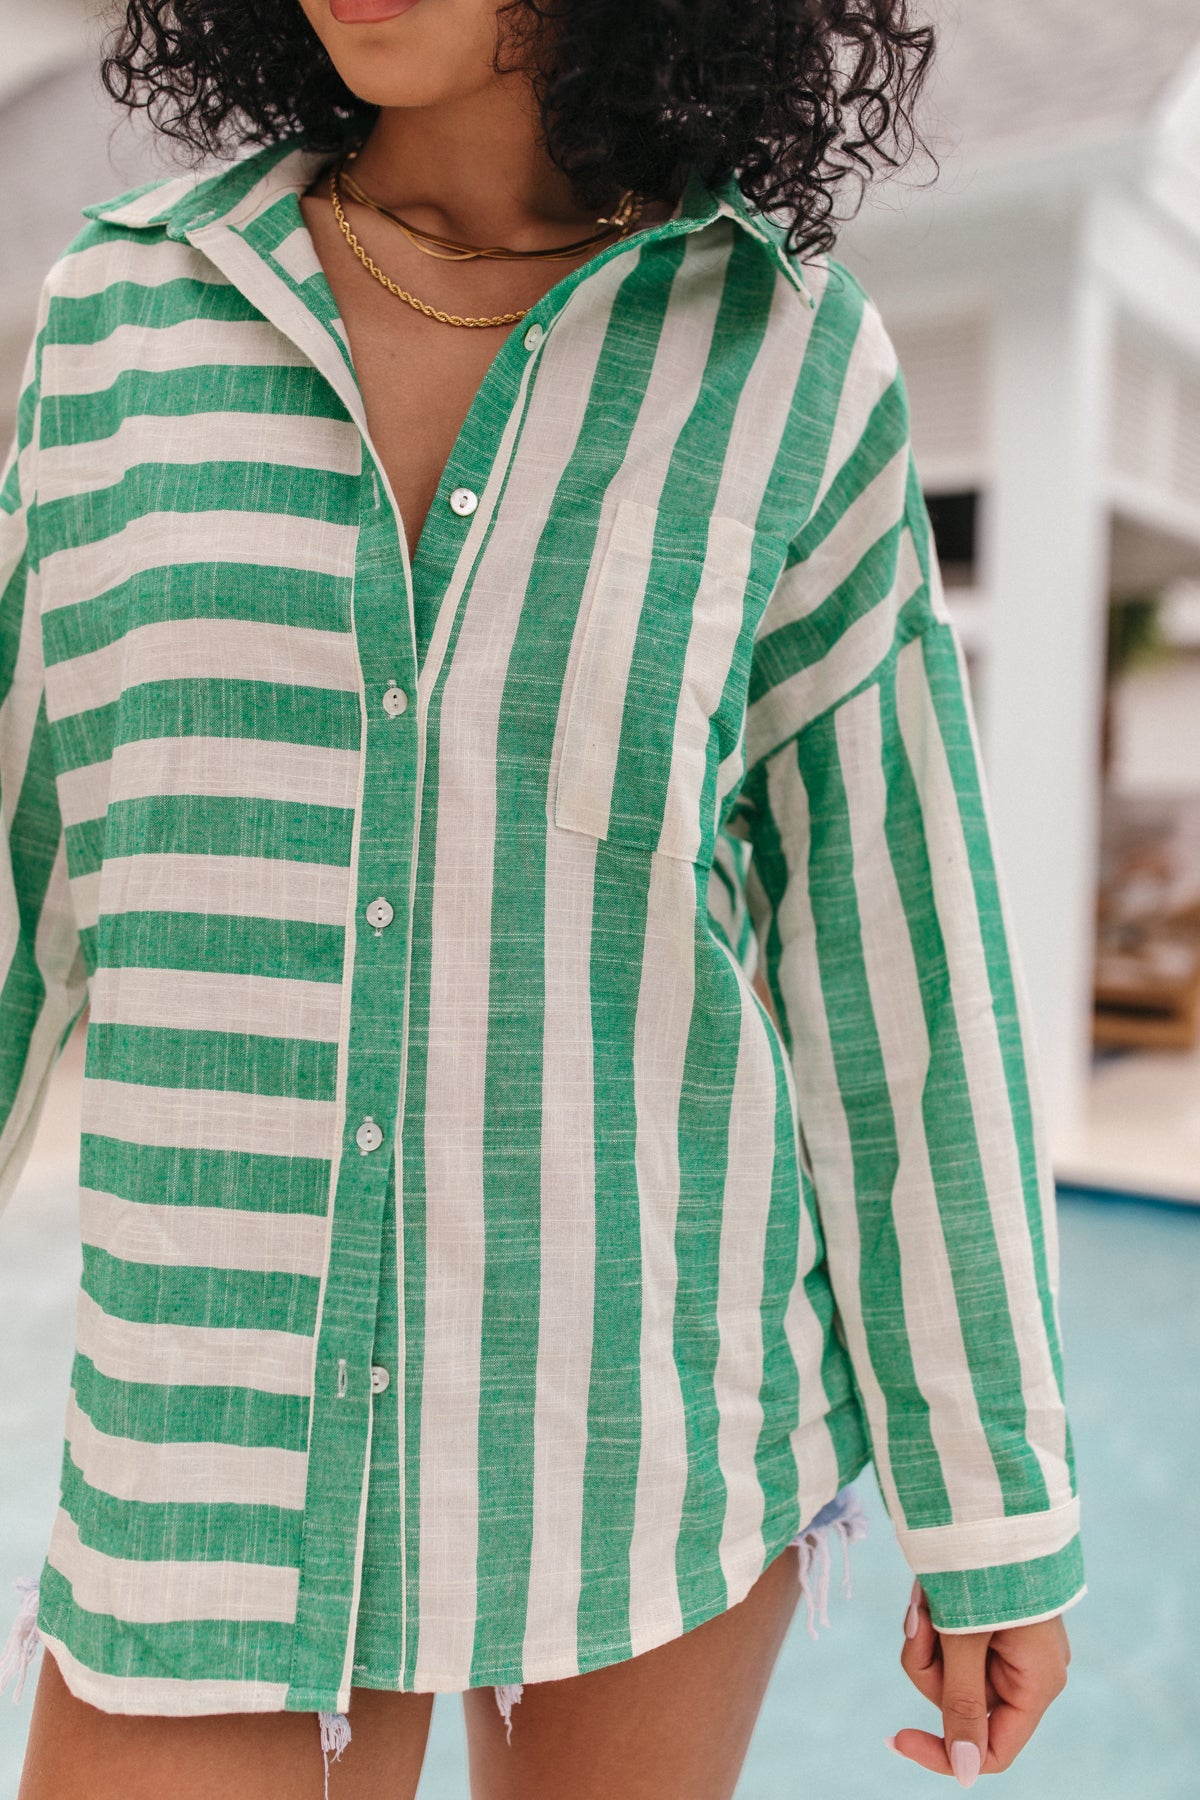 Haley Striped Linen Button Down, alternate, color, Green